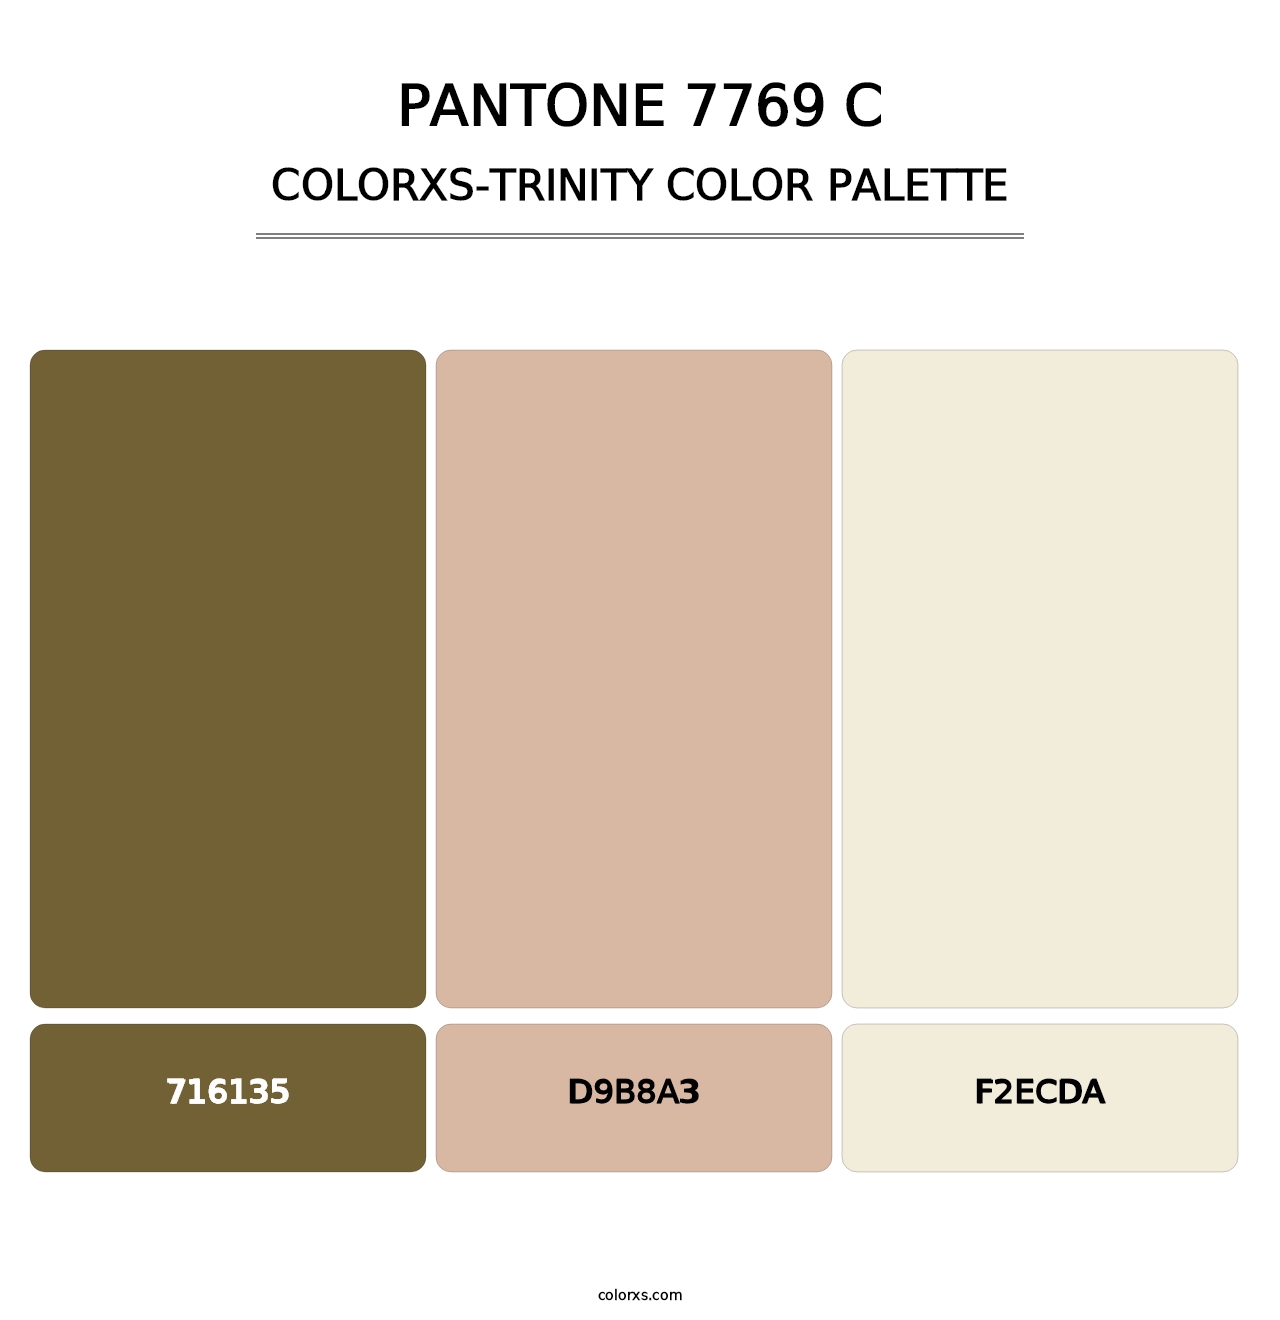 PANTONE 7769 C - Colorxs Trinity Palette